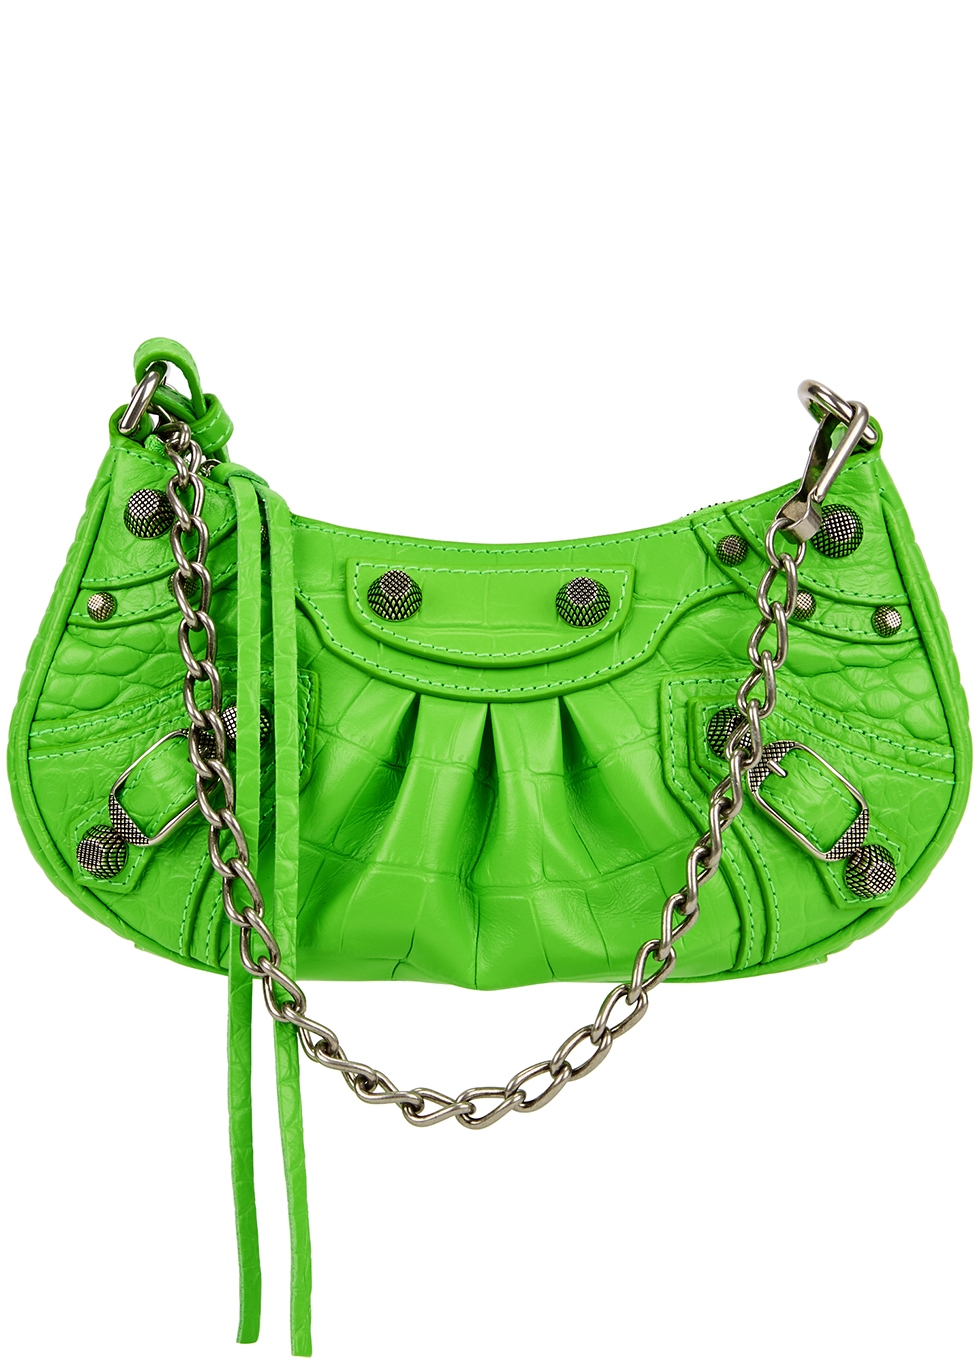 Balenciaga Le Cagole mini green leather cross-body bag - Harvey Nichols